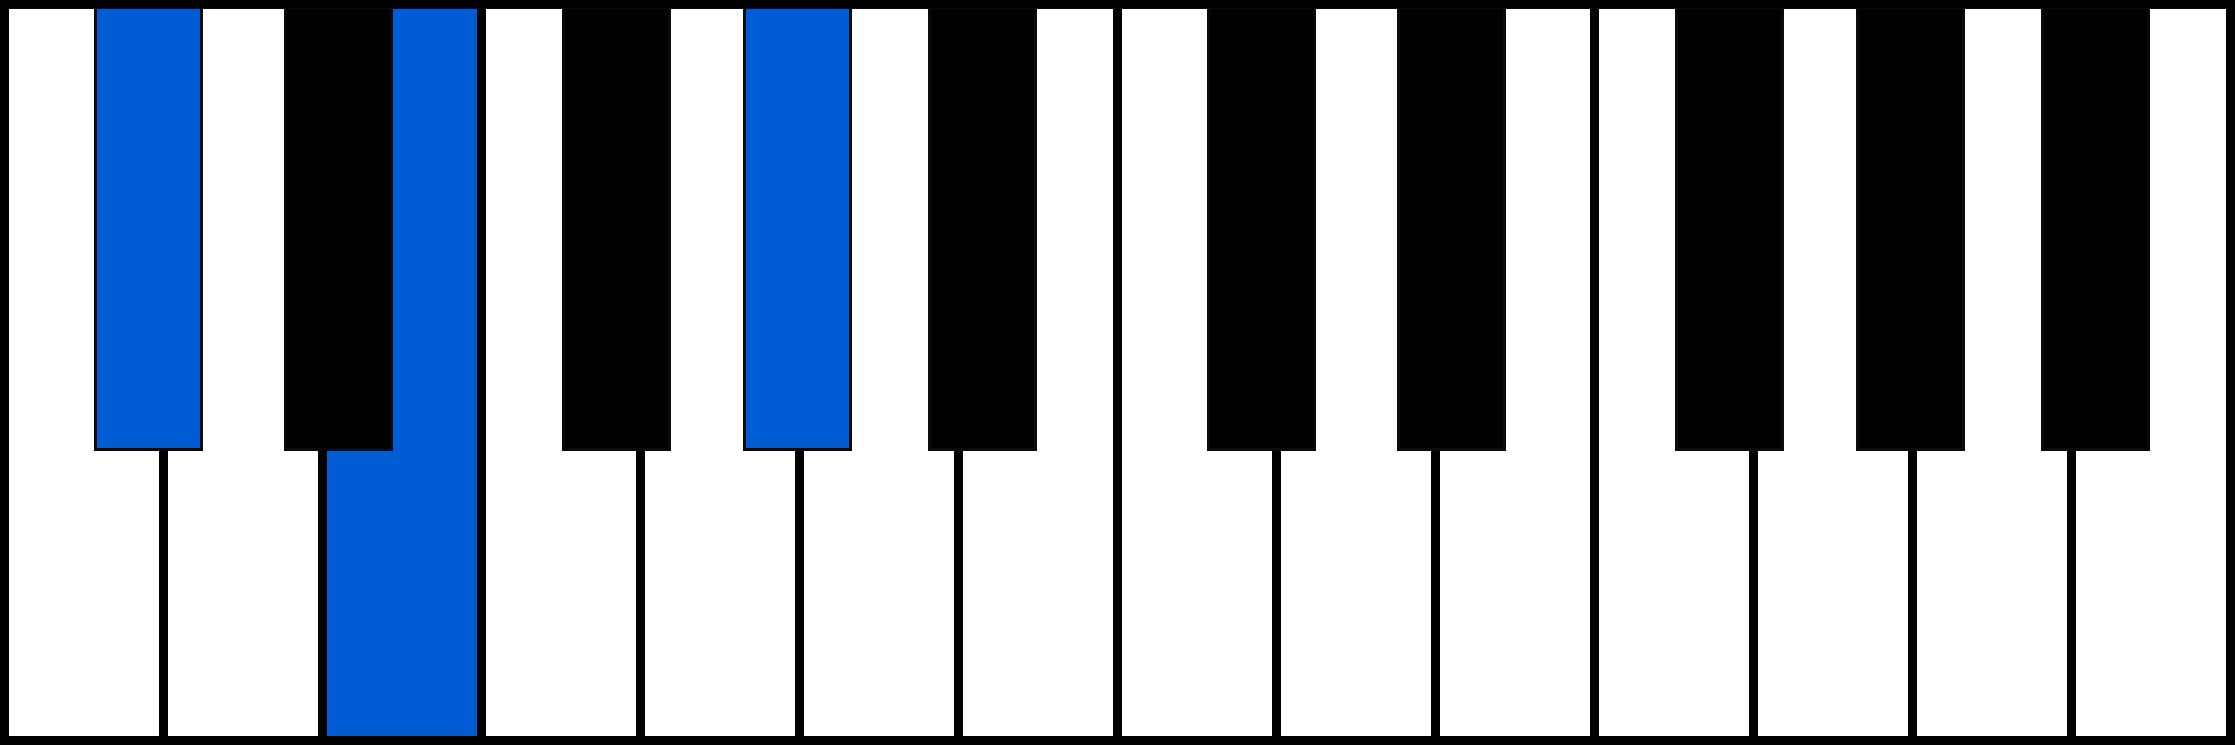 C#m piano chord